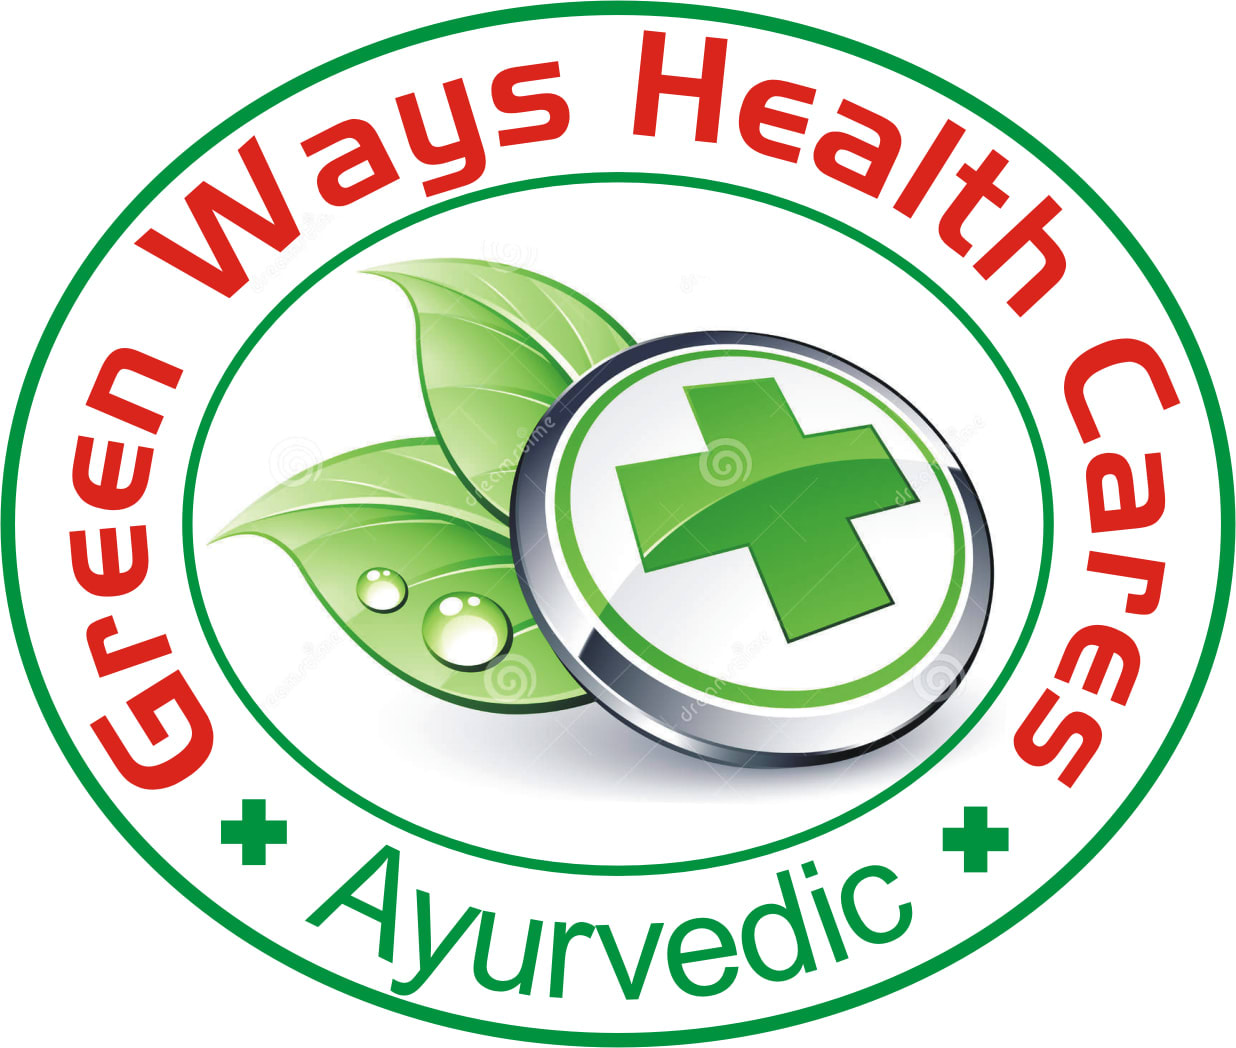 Green Ways Health Cares